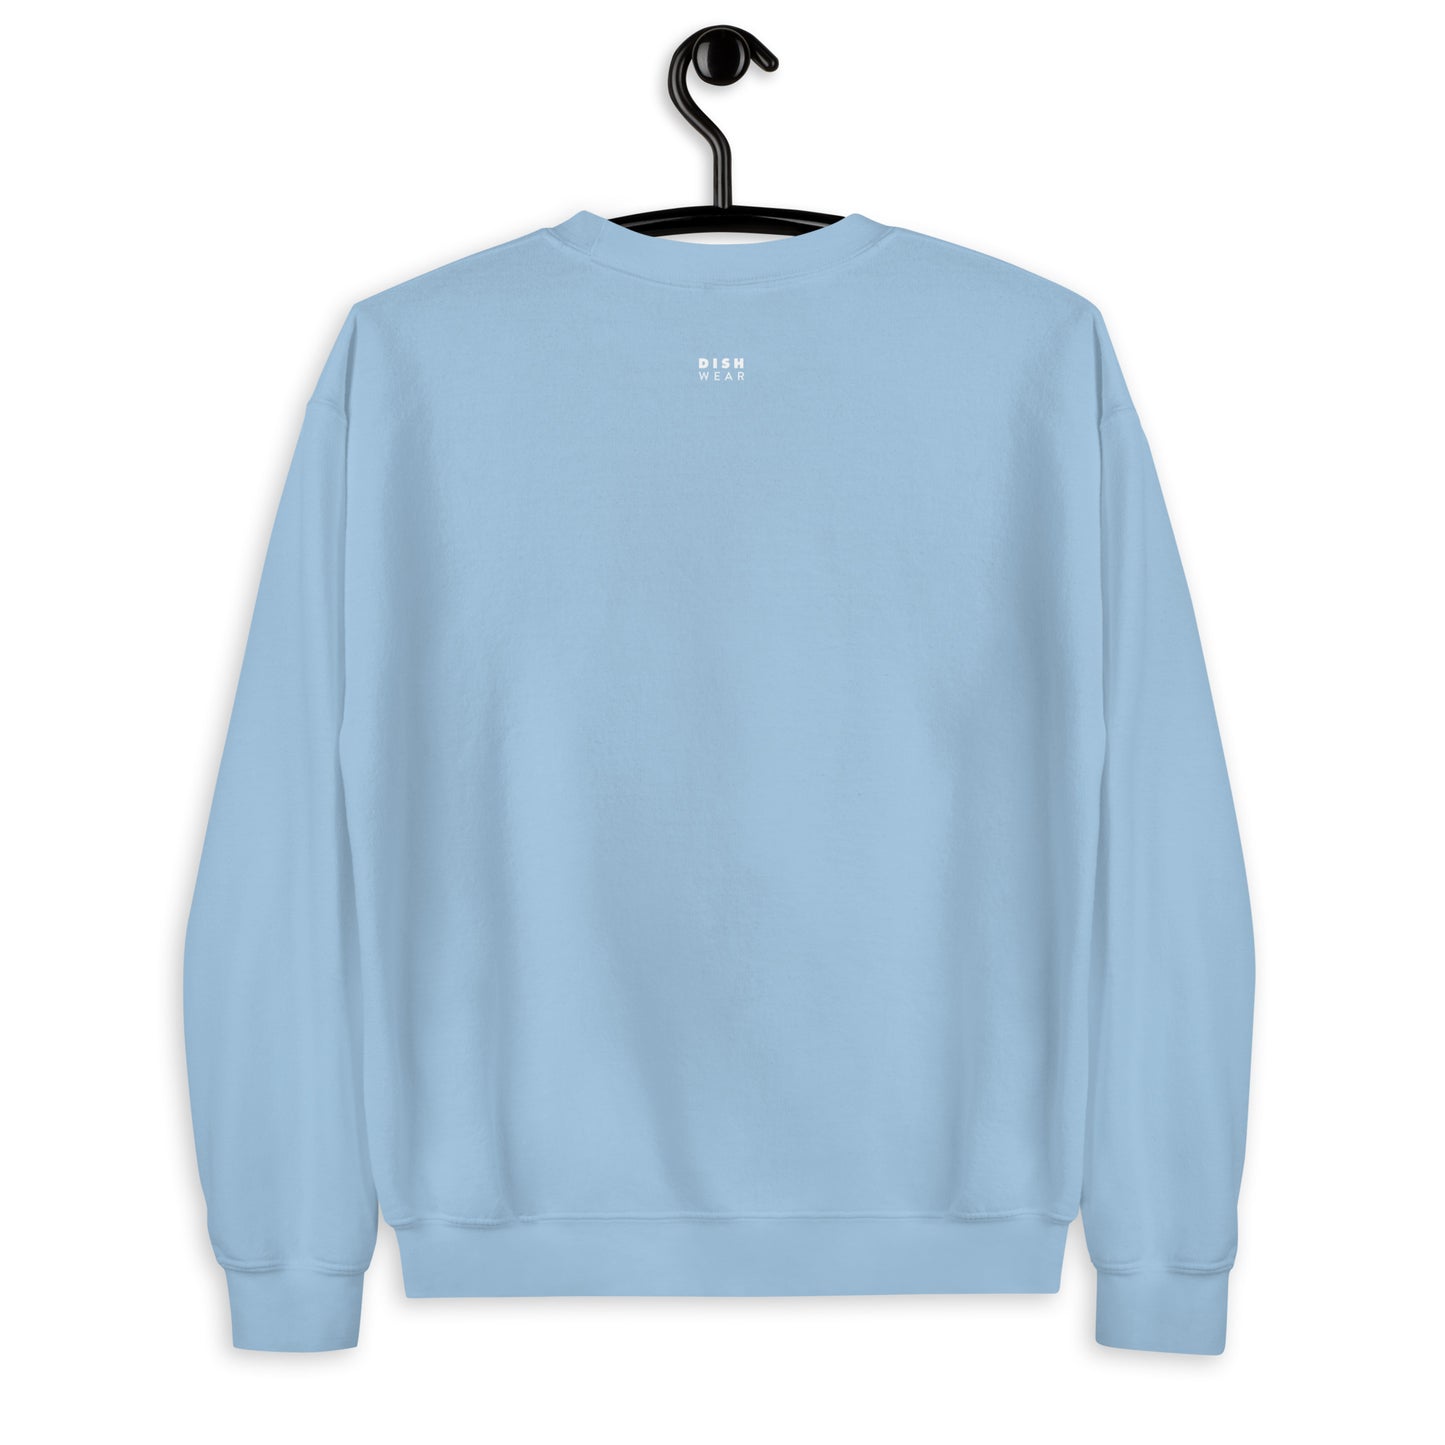 Gravy Sweatshirt - Straight Font